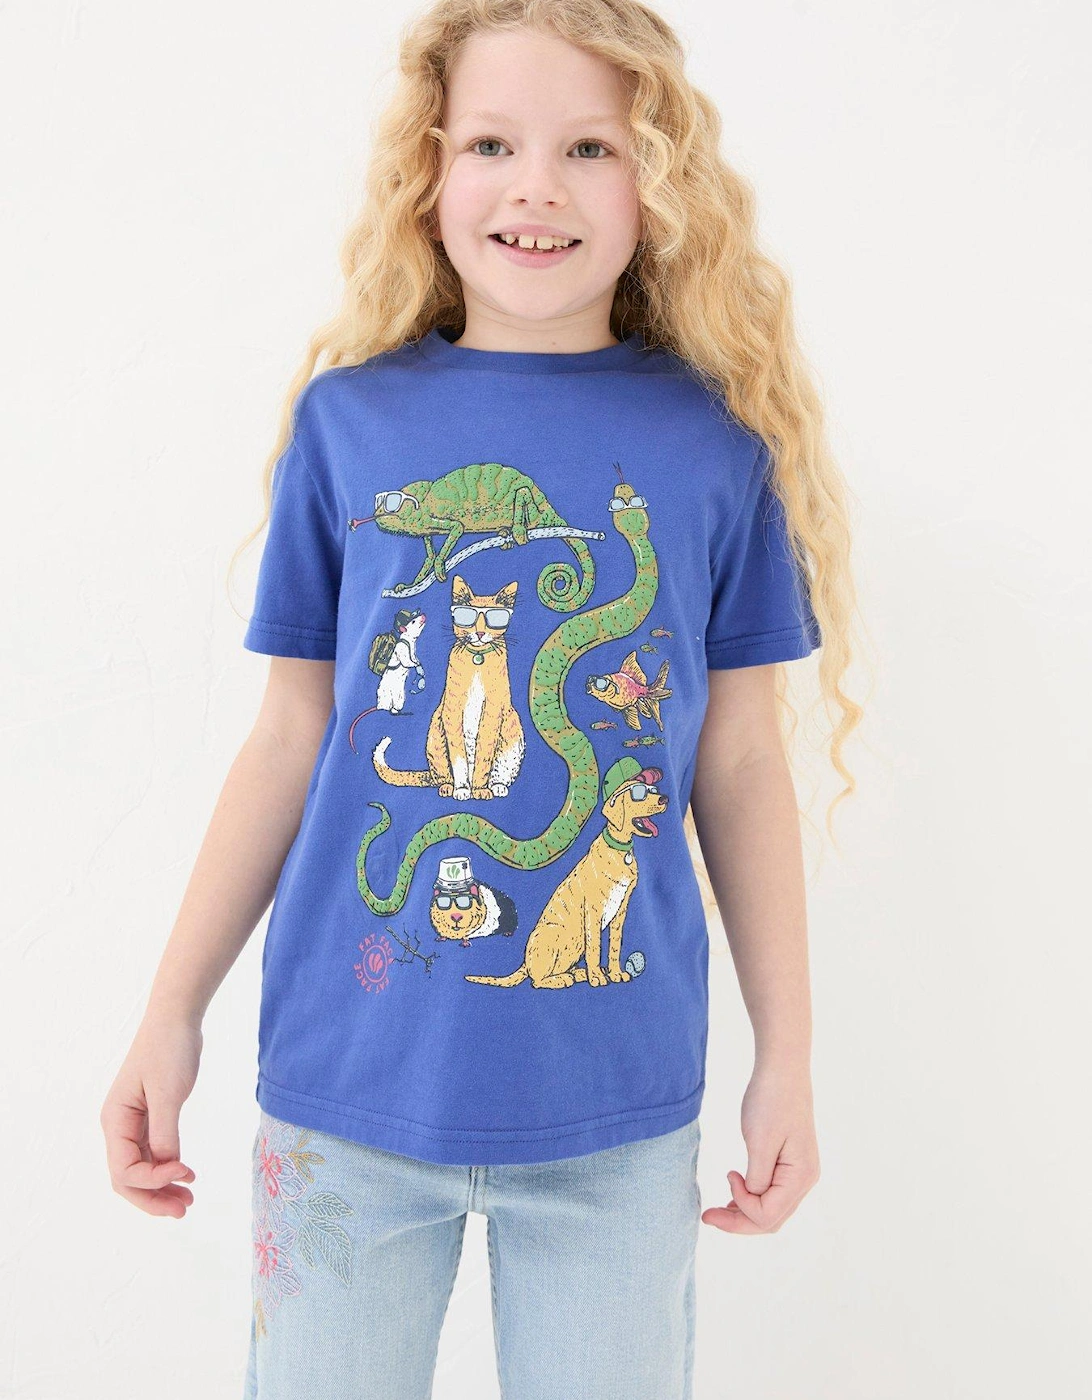 Girls Pet Graphic Tshirt - Blue